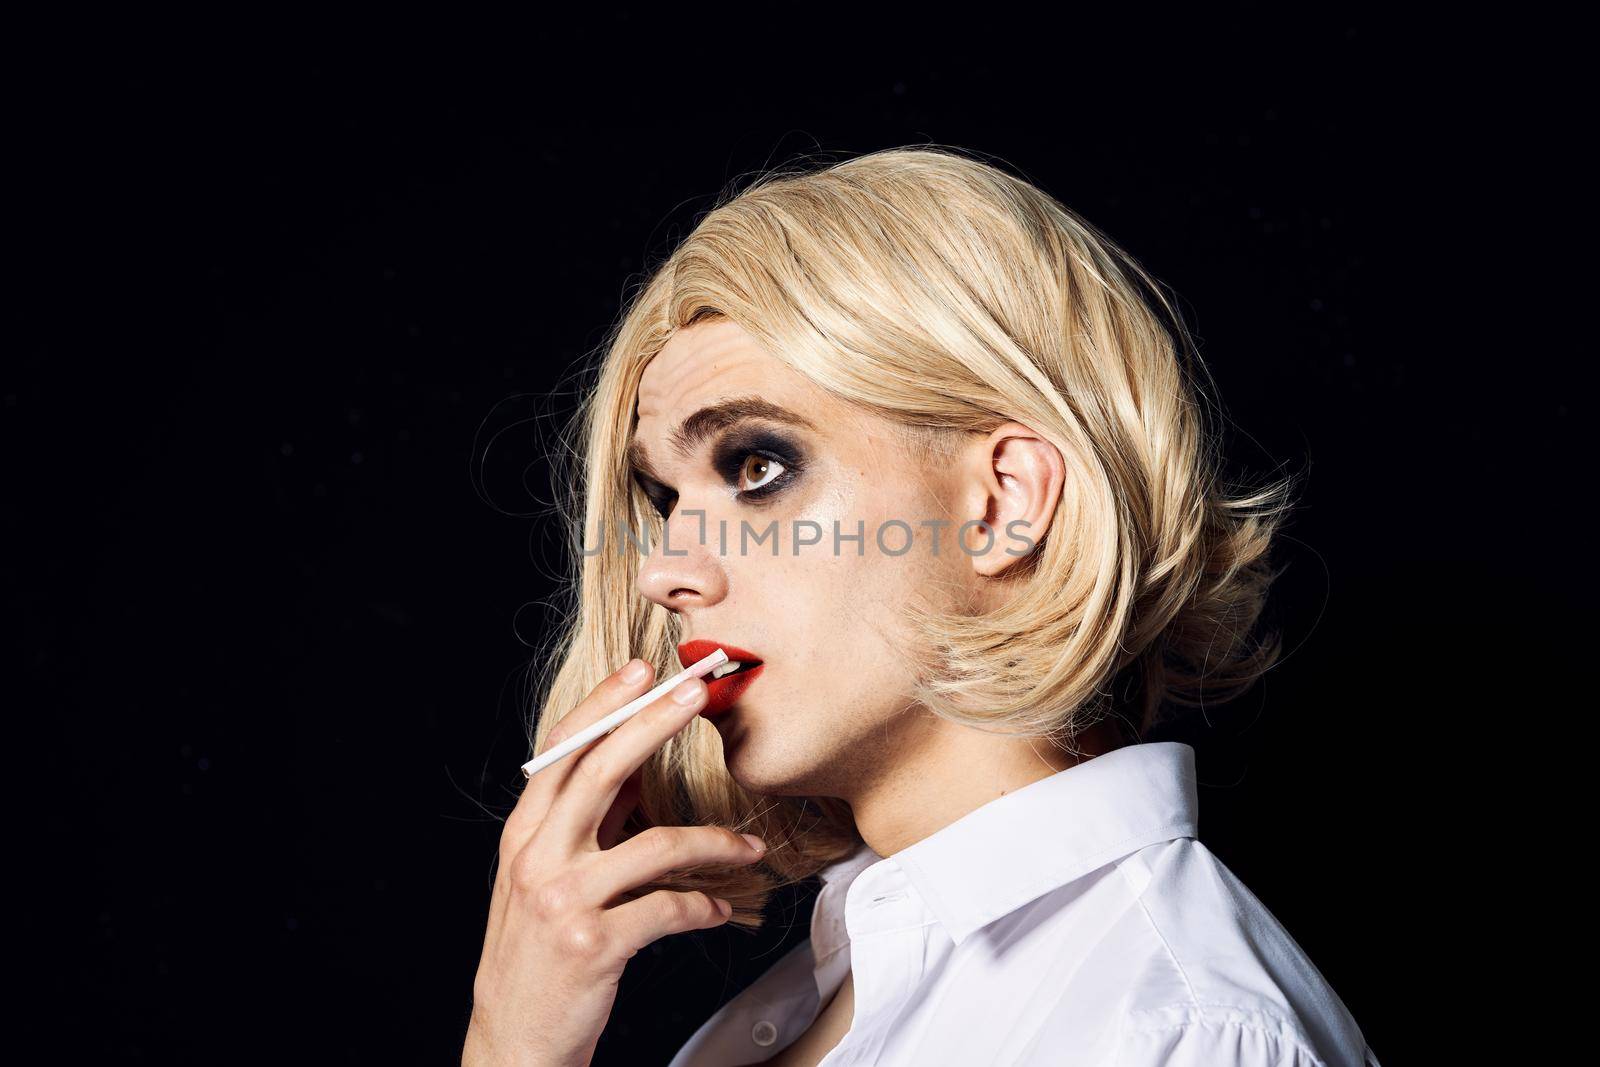 man in womens wig crossdresser makeup lgbt community. High quality photo